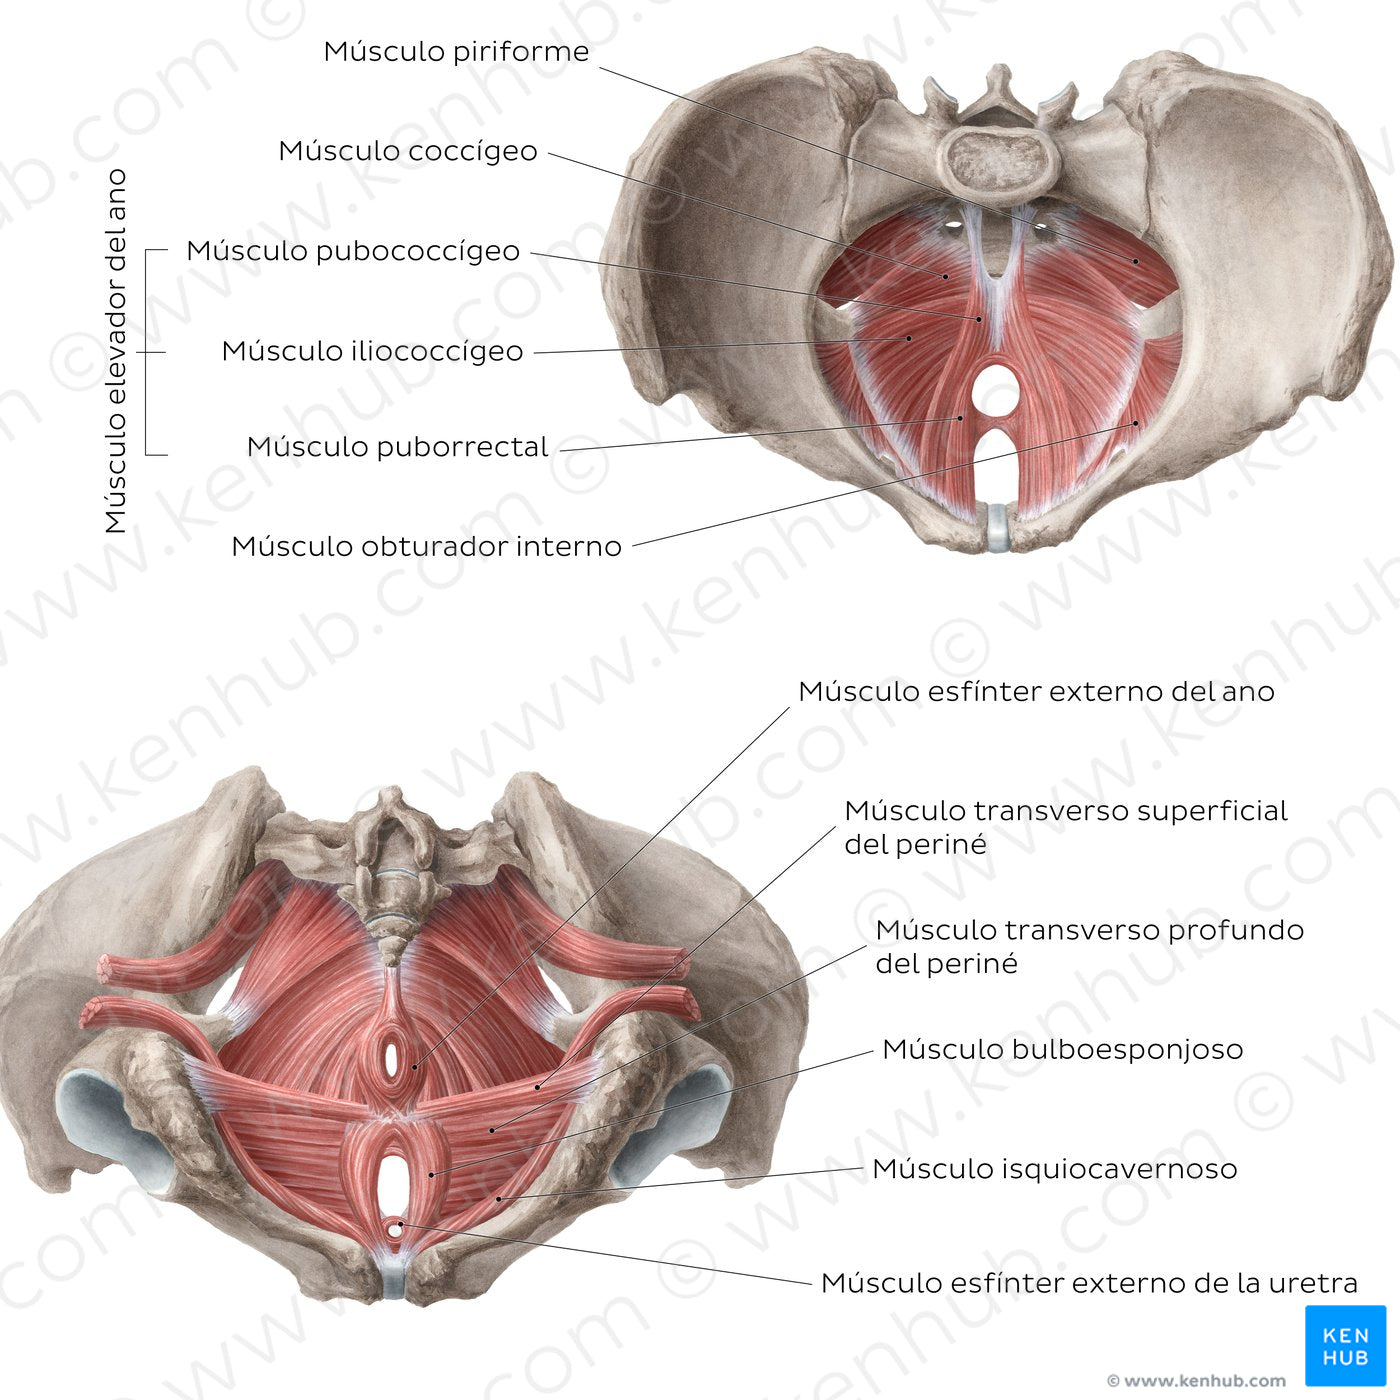 Muscles of the pelvic floor (Spanish)